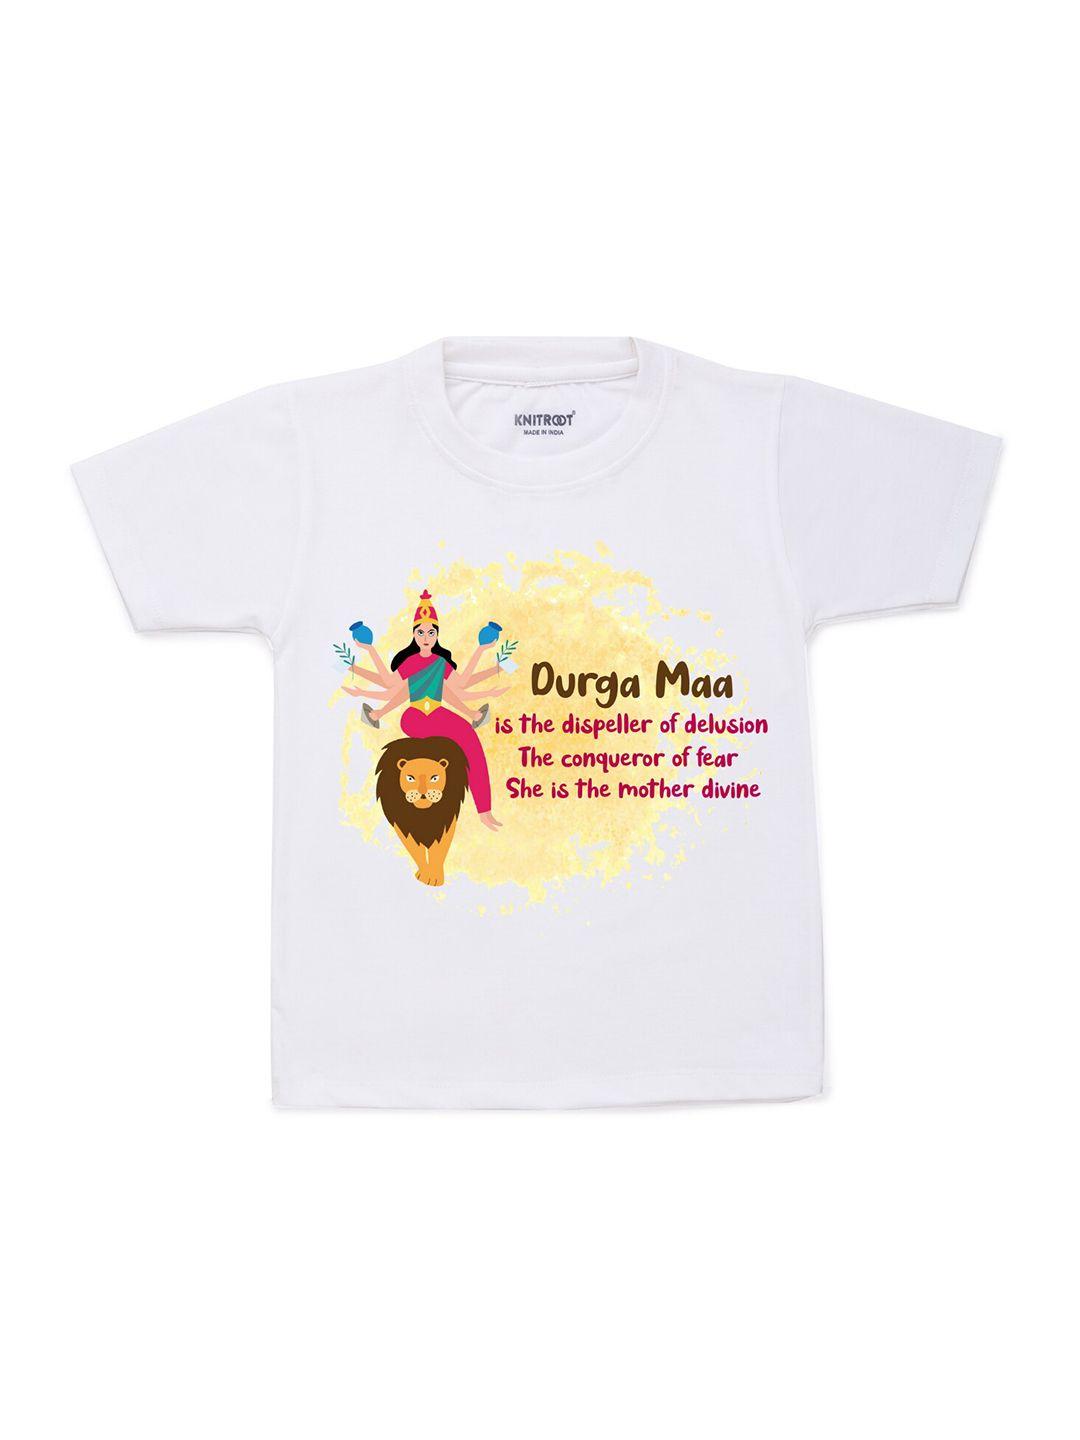 knitroot unisex kids white & yellow typography printed cotton t-shirt